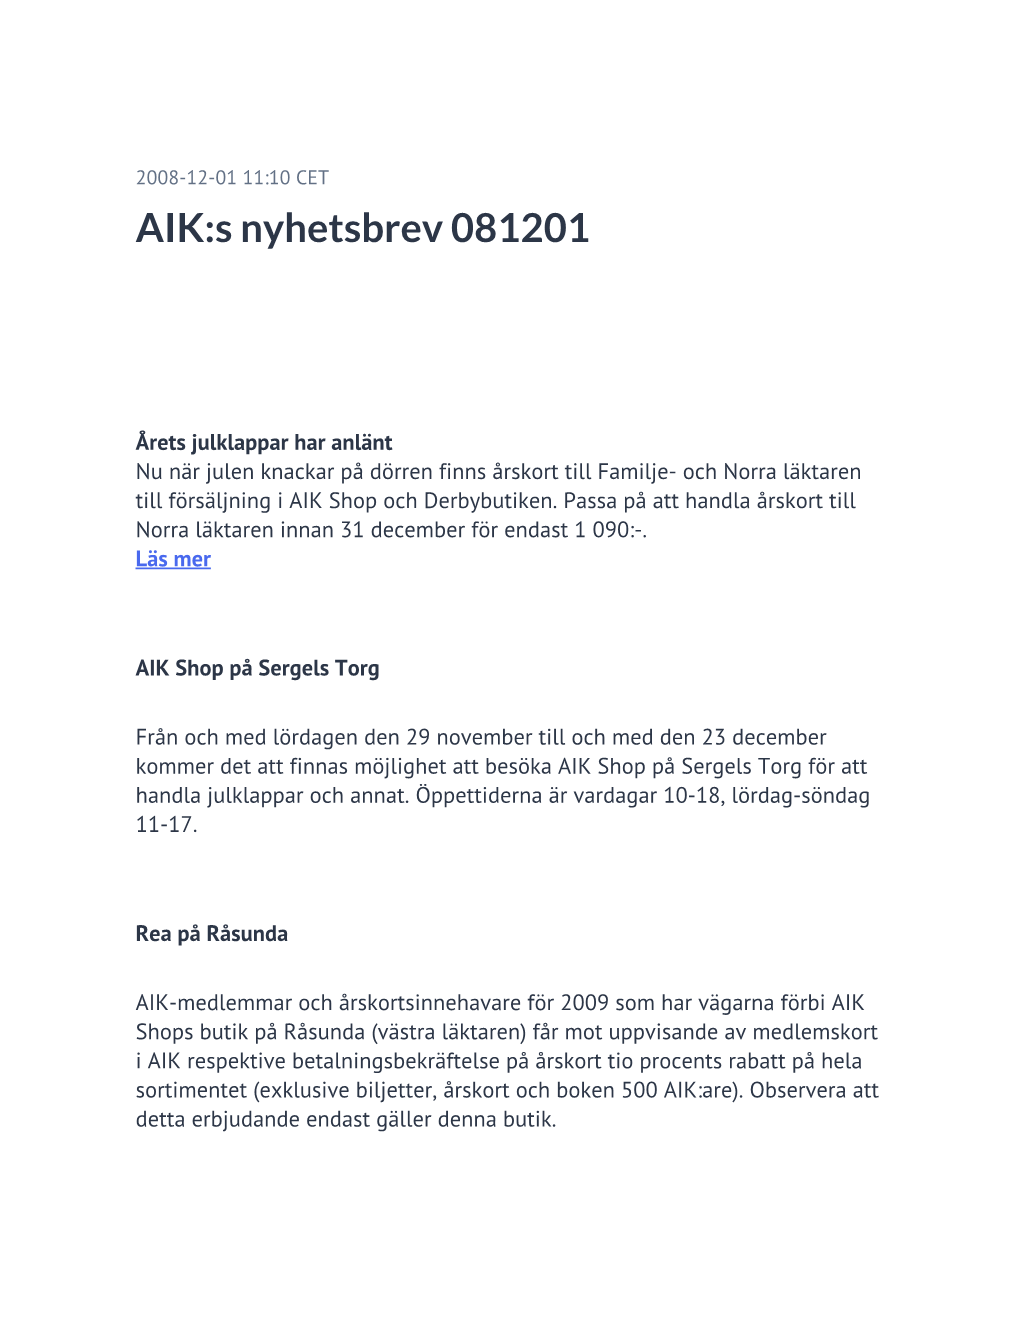 AIK:S Nyhetsbrev 081201